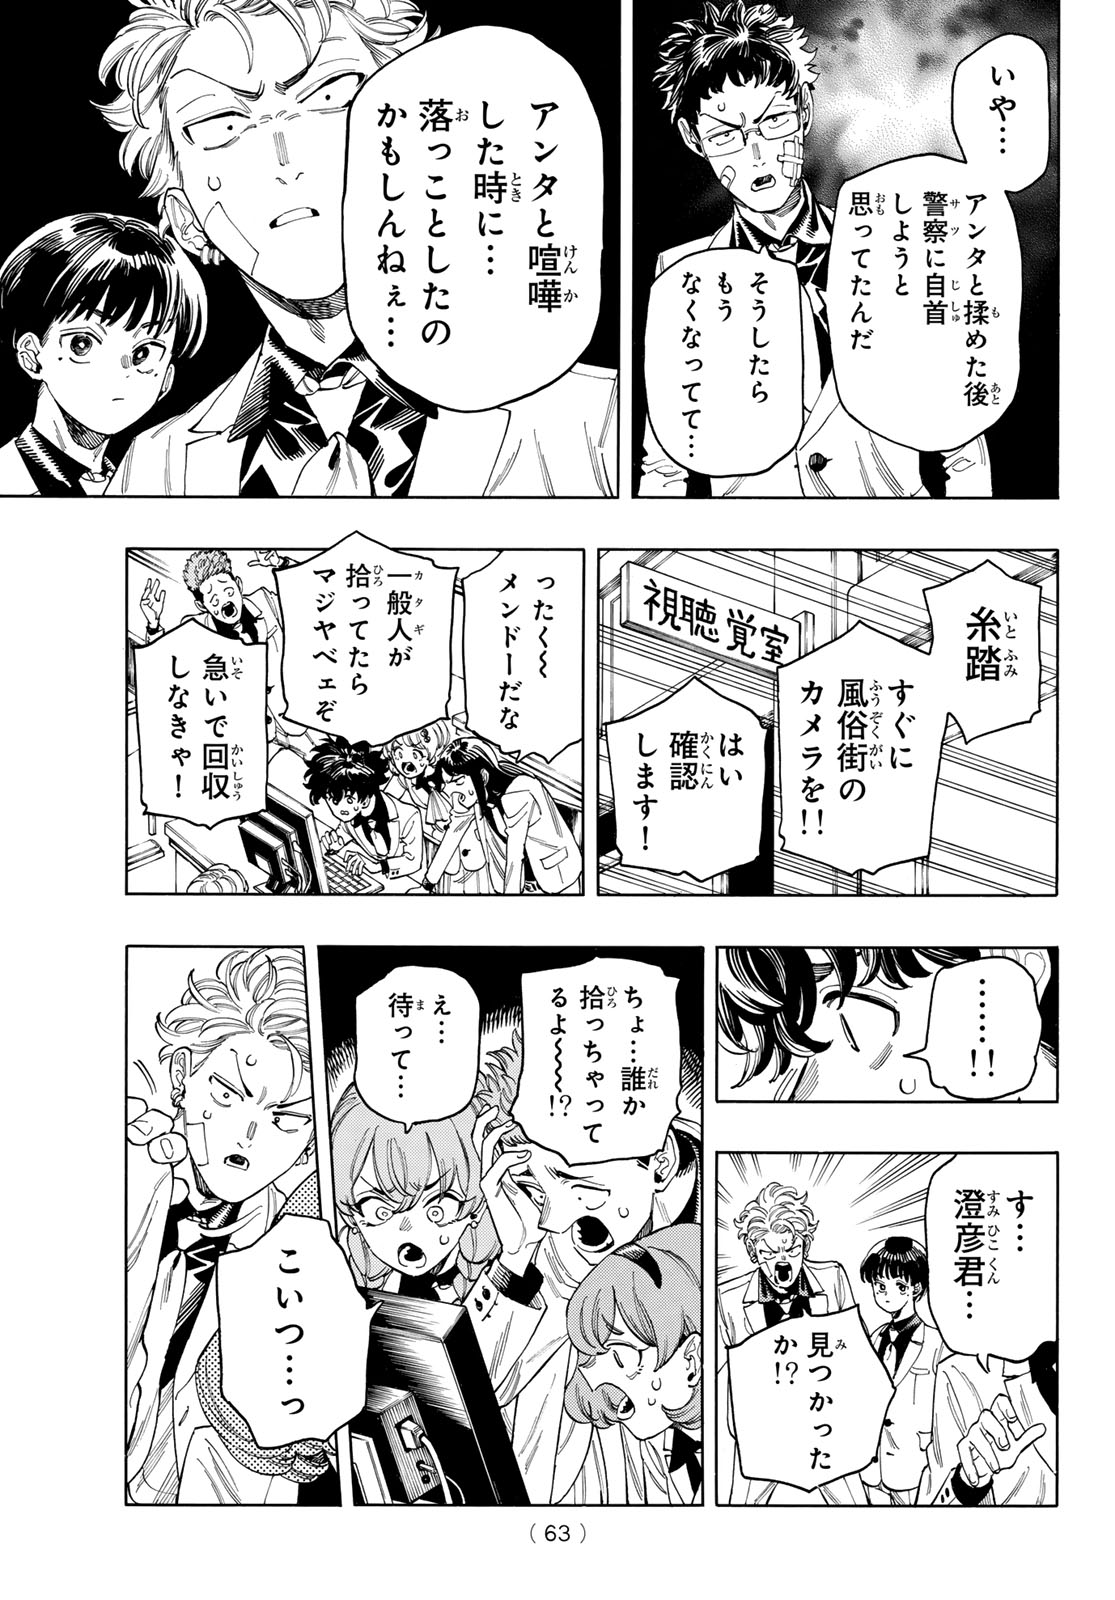 Akabane Honeko no Bodyguard - Chapter 79 - Page 17